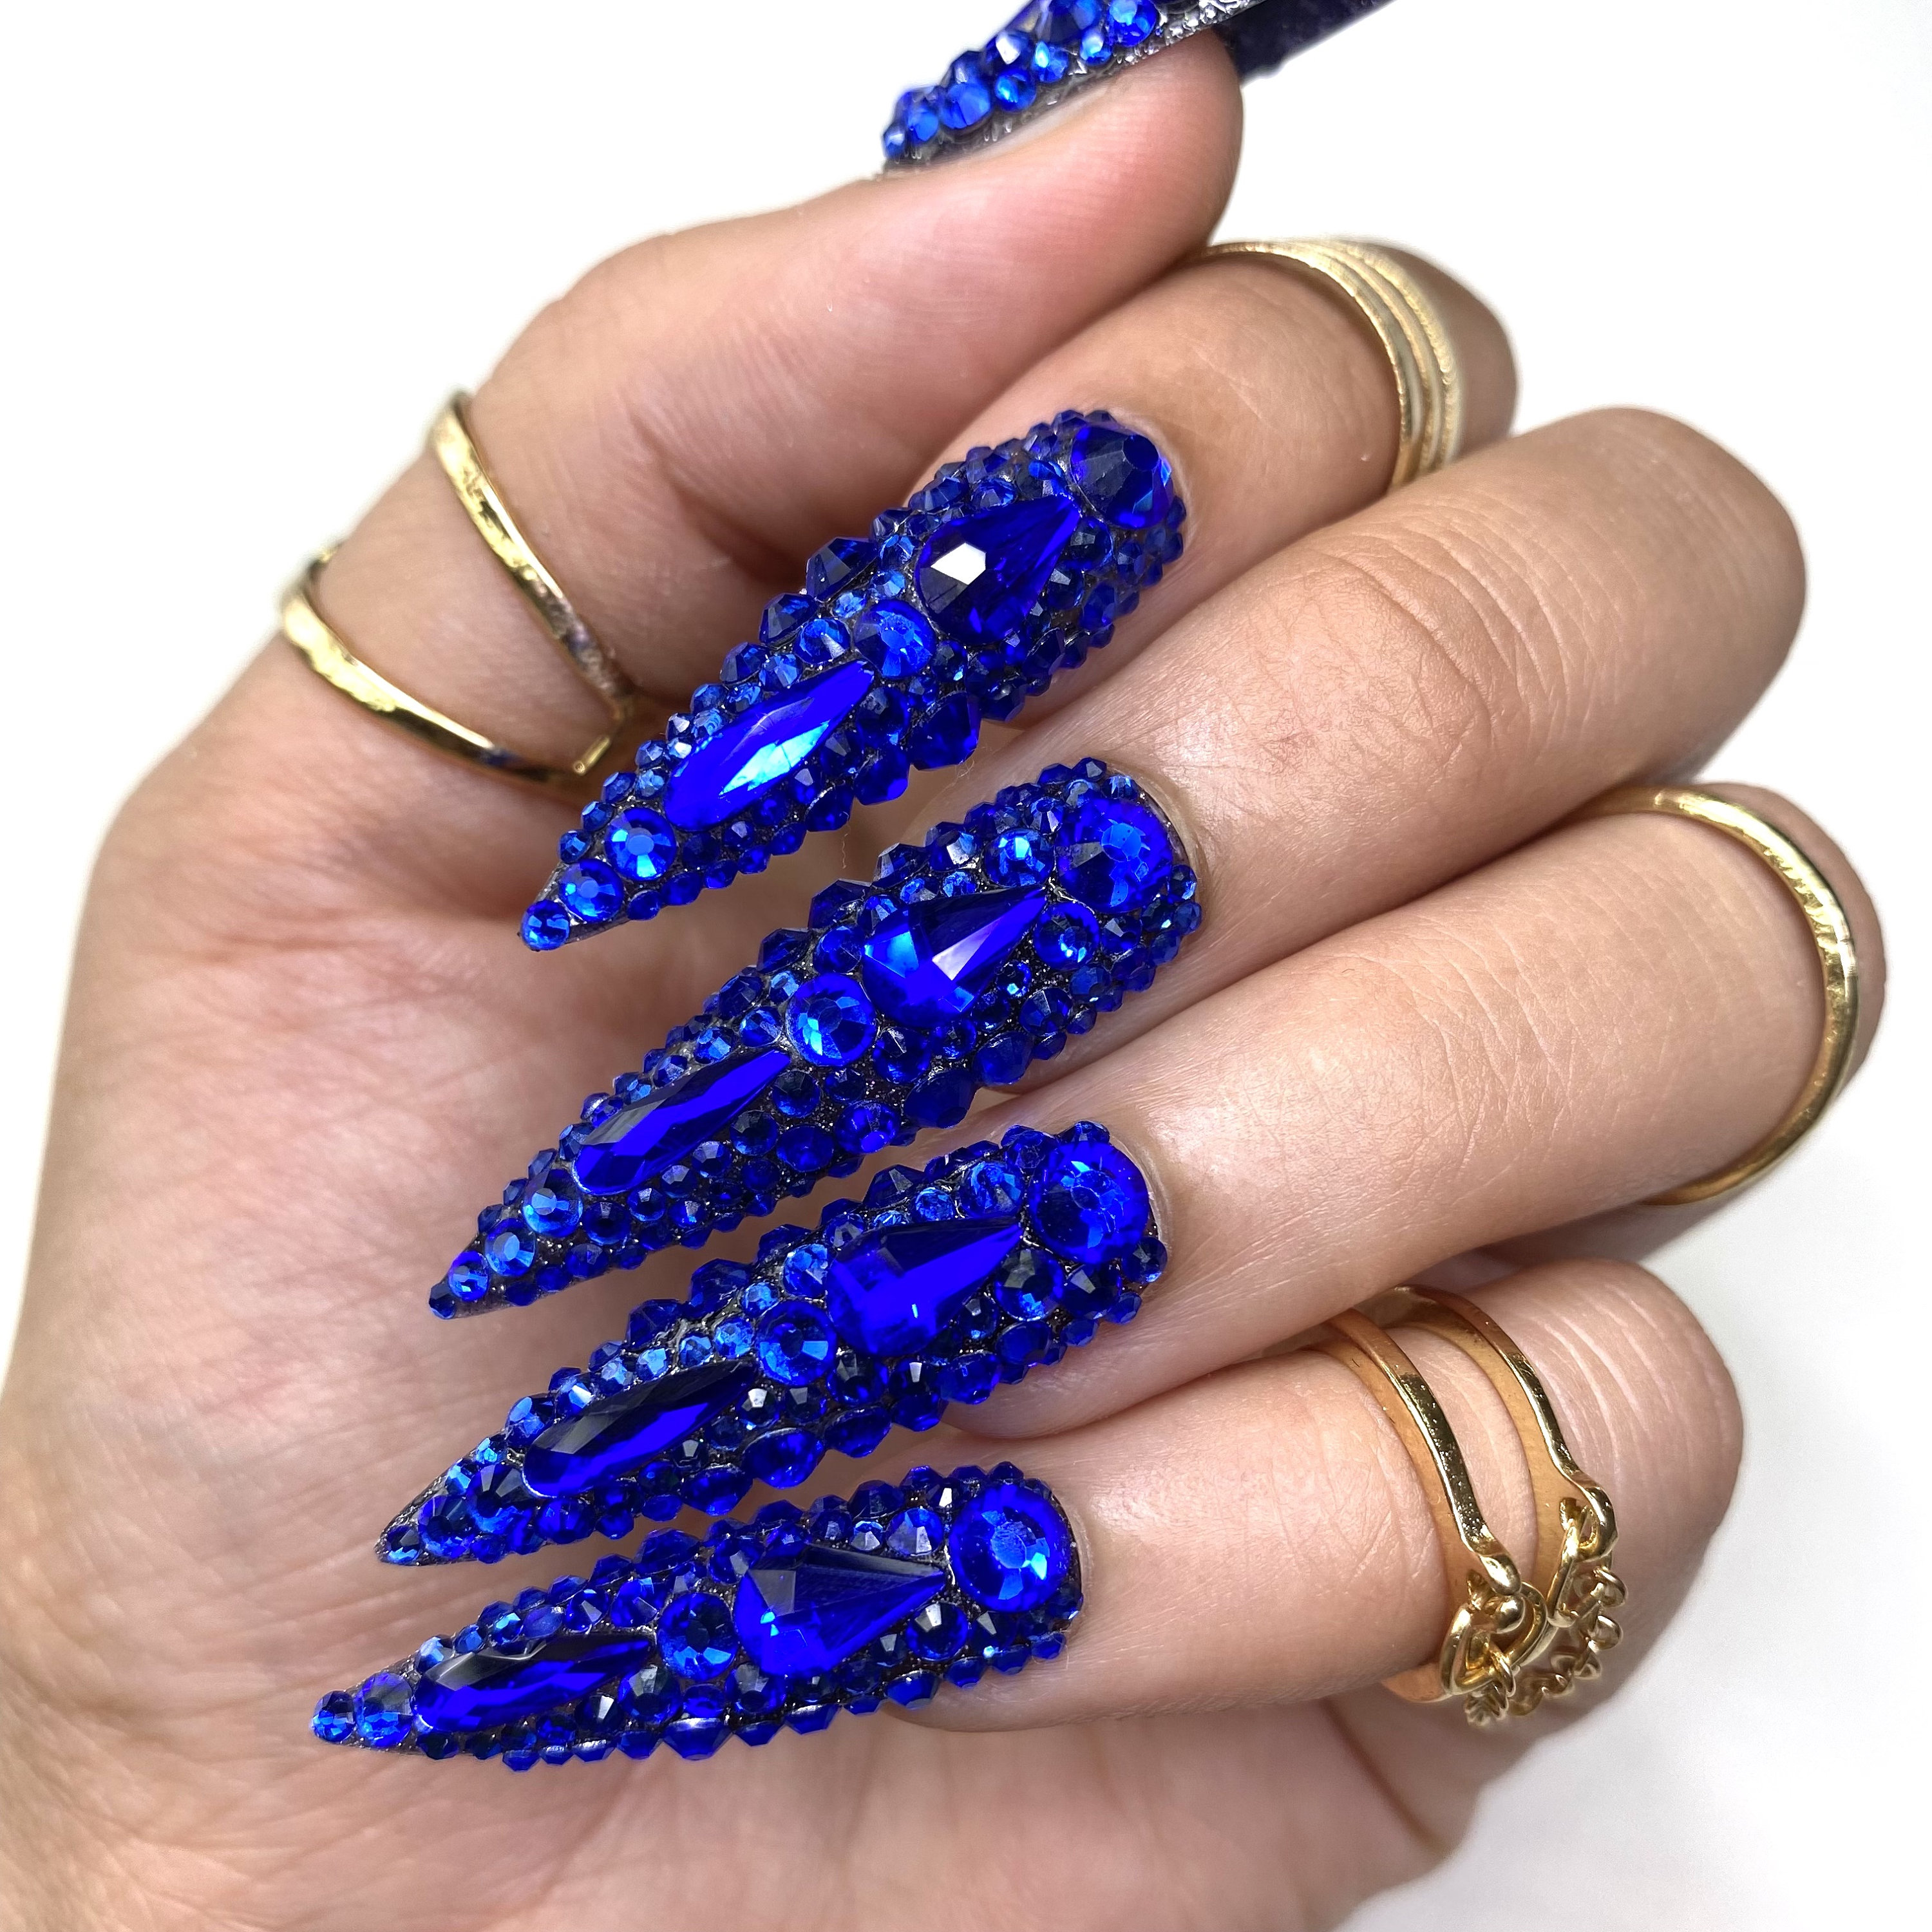 Handmade French Square Nail Rhinestone Shinny Blue Chic Elegant Classic  Press-on Gel Nails Summer/autumn Manicure Manicura Long Nailart 